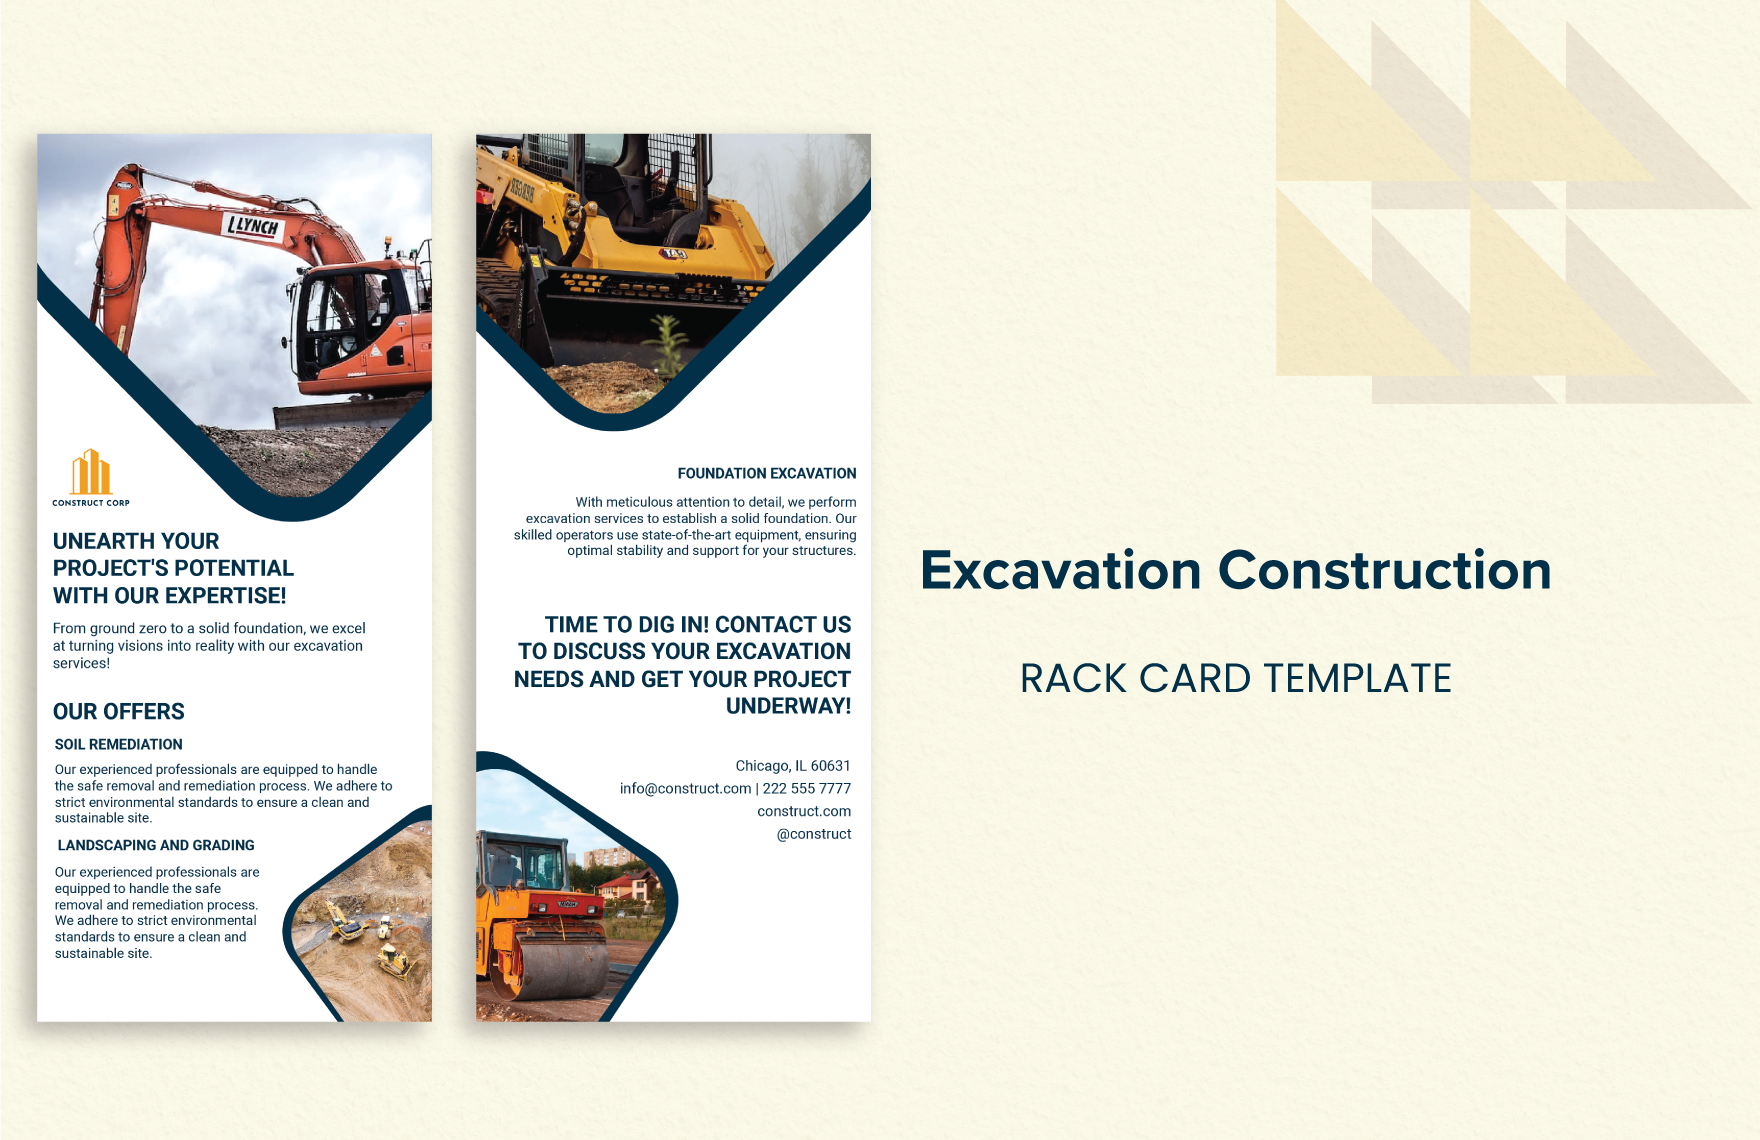 Excavation Construction Rack Card Template